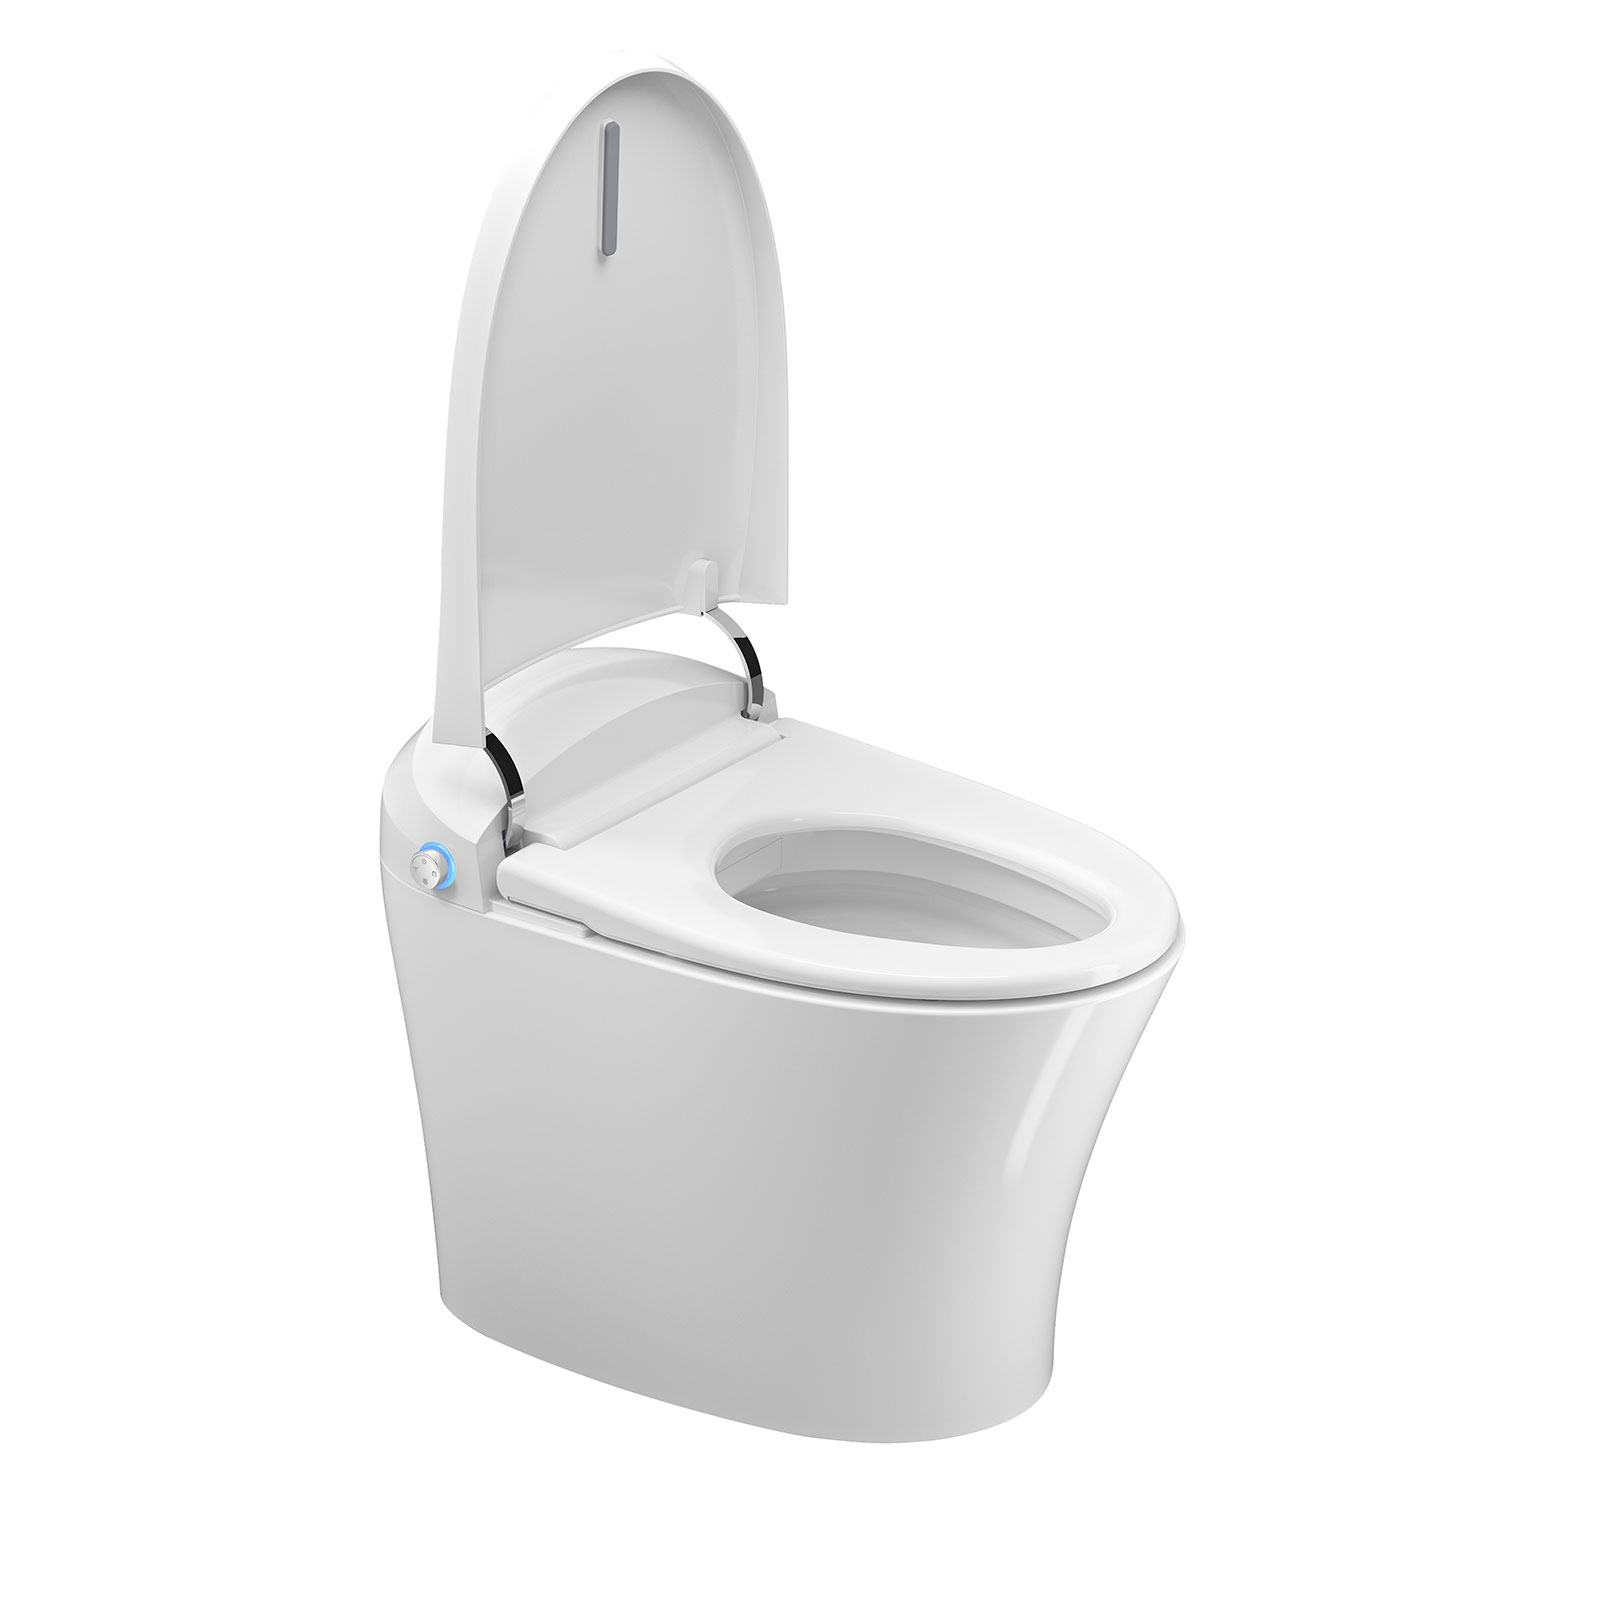 https://www.conceptbaths.com/images/detailed/17/smart-toilet-bidet-832DF-5.jpg